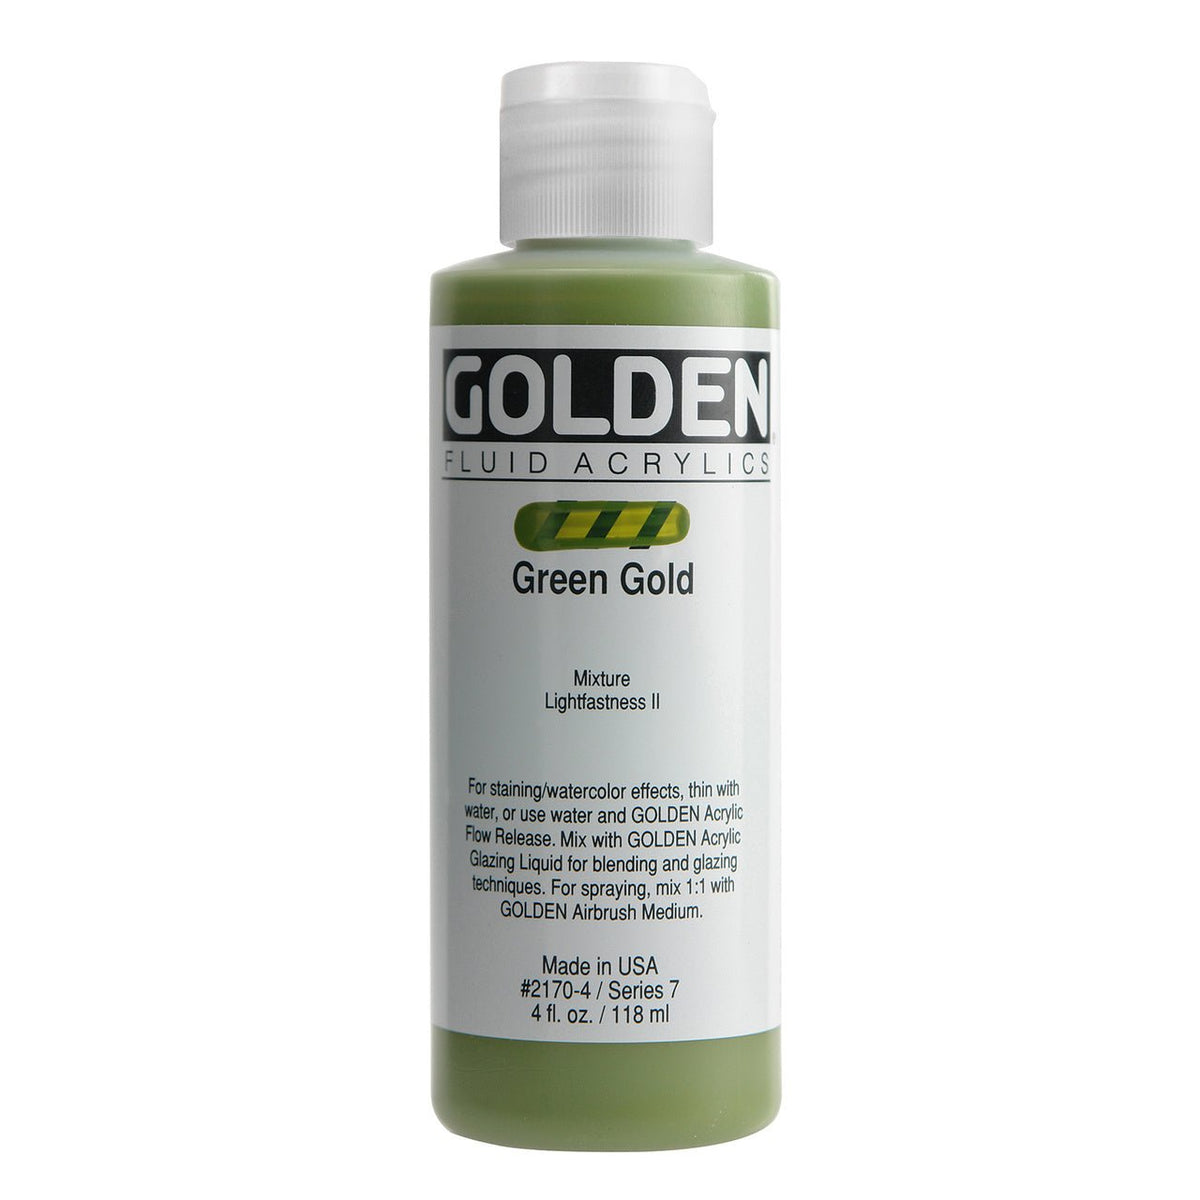 Golden Fluid Acrylic Green Gold 4 oz - merriartist.com